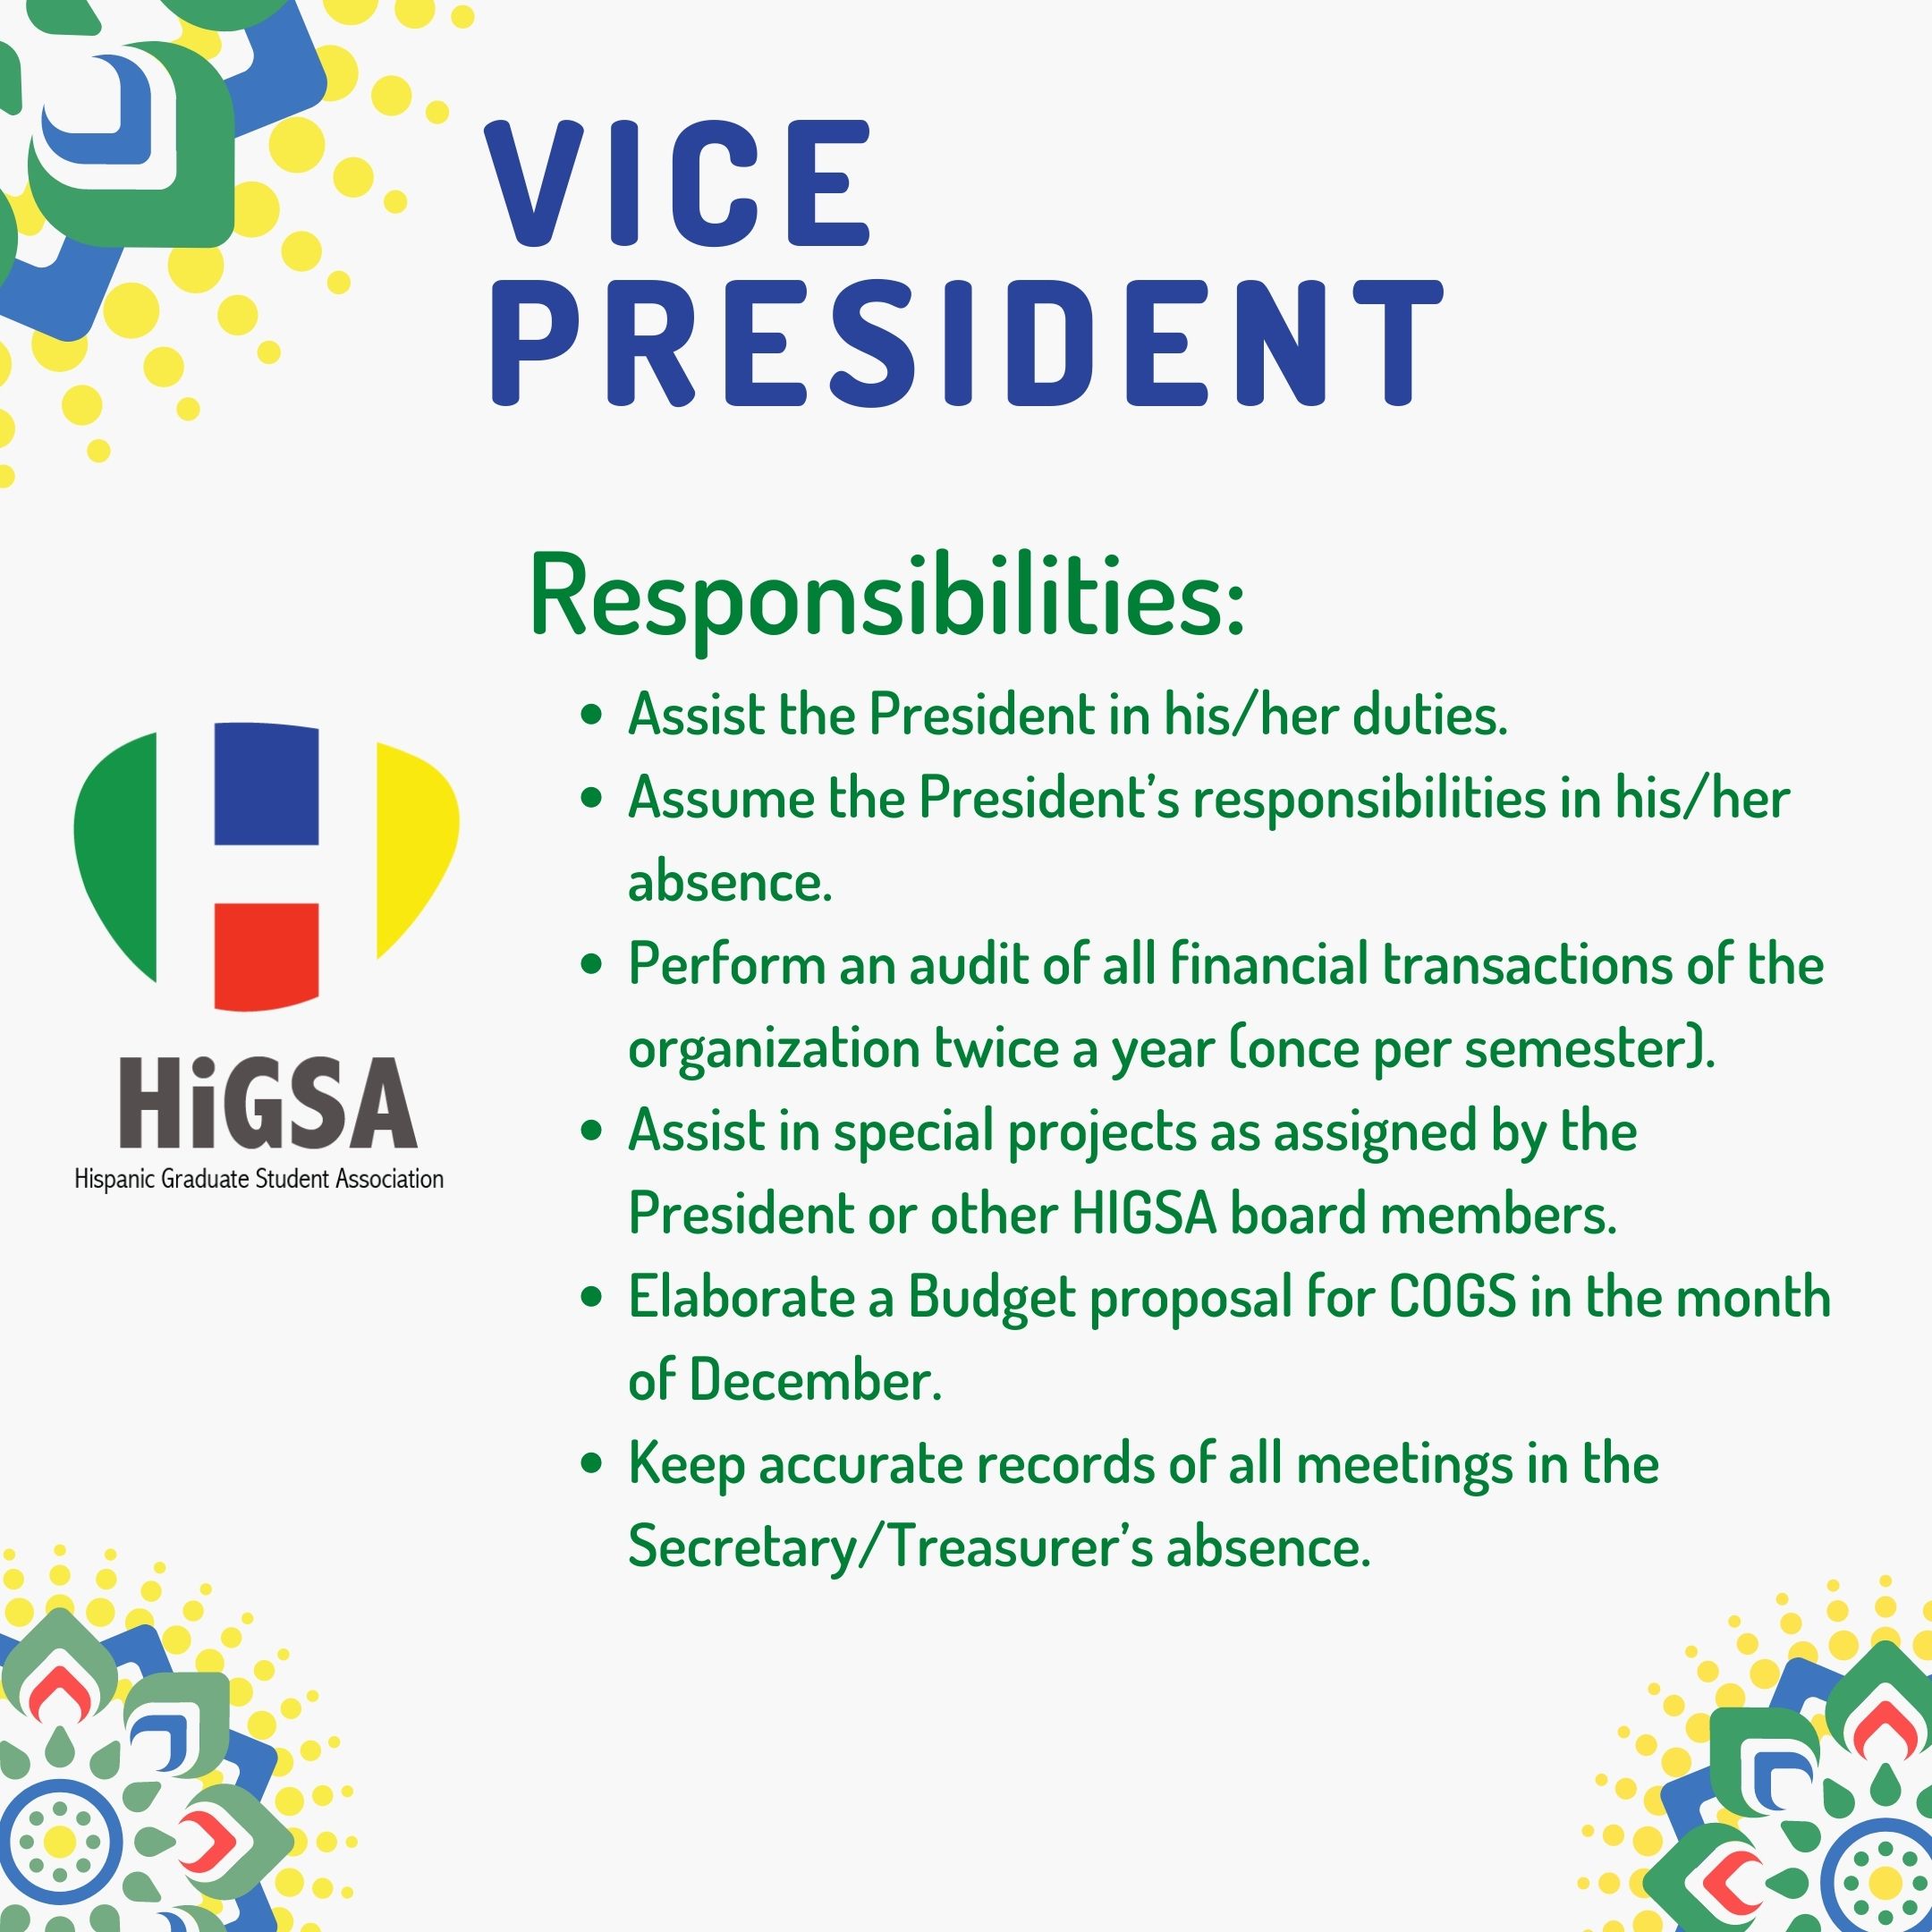 Vice Prsident duties